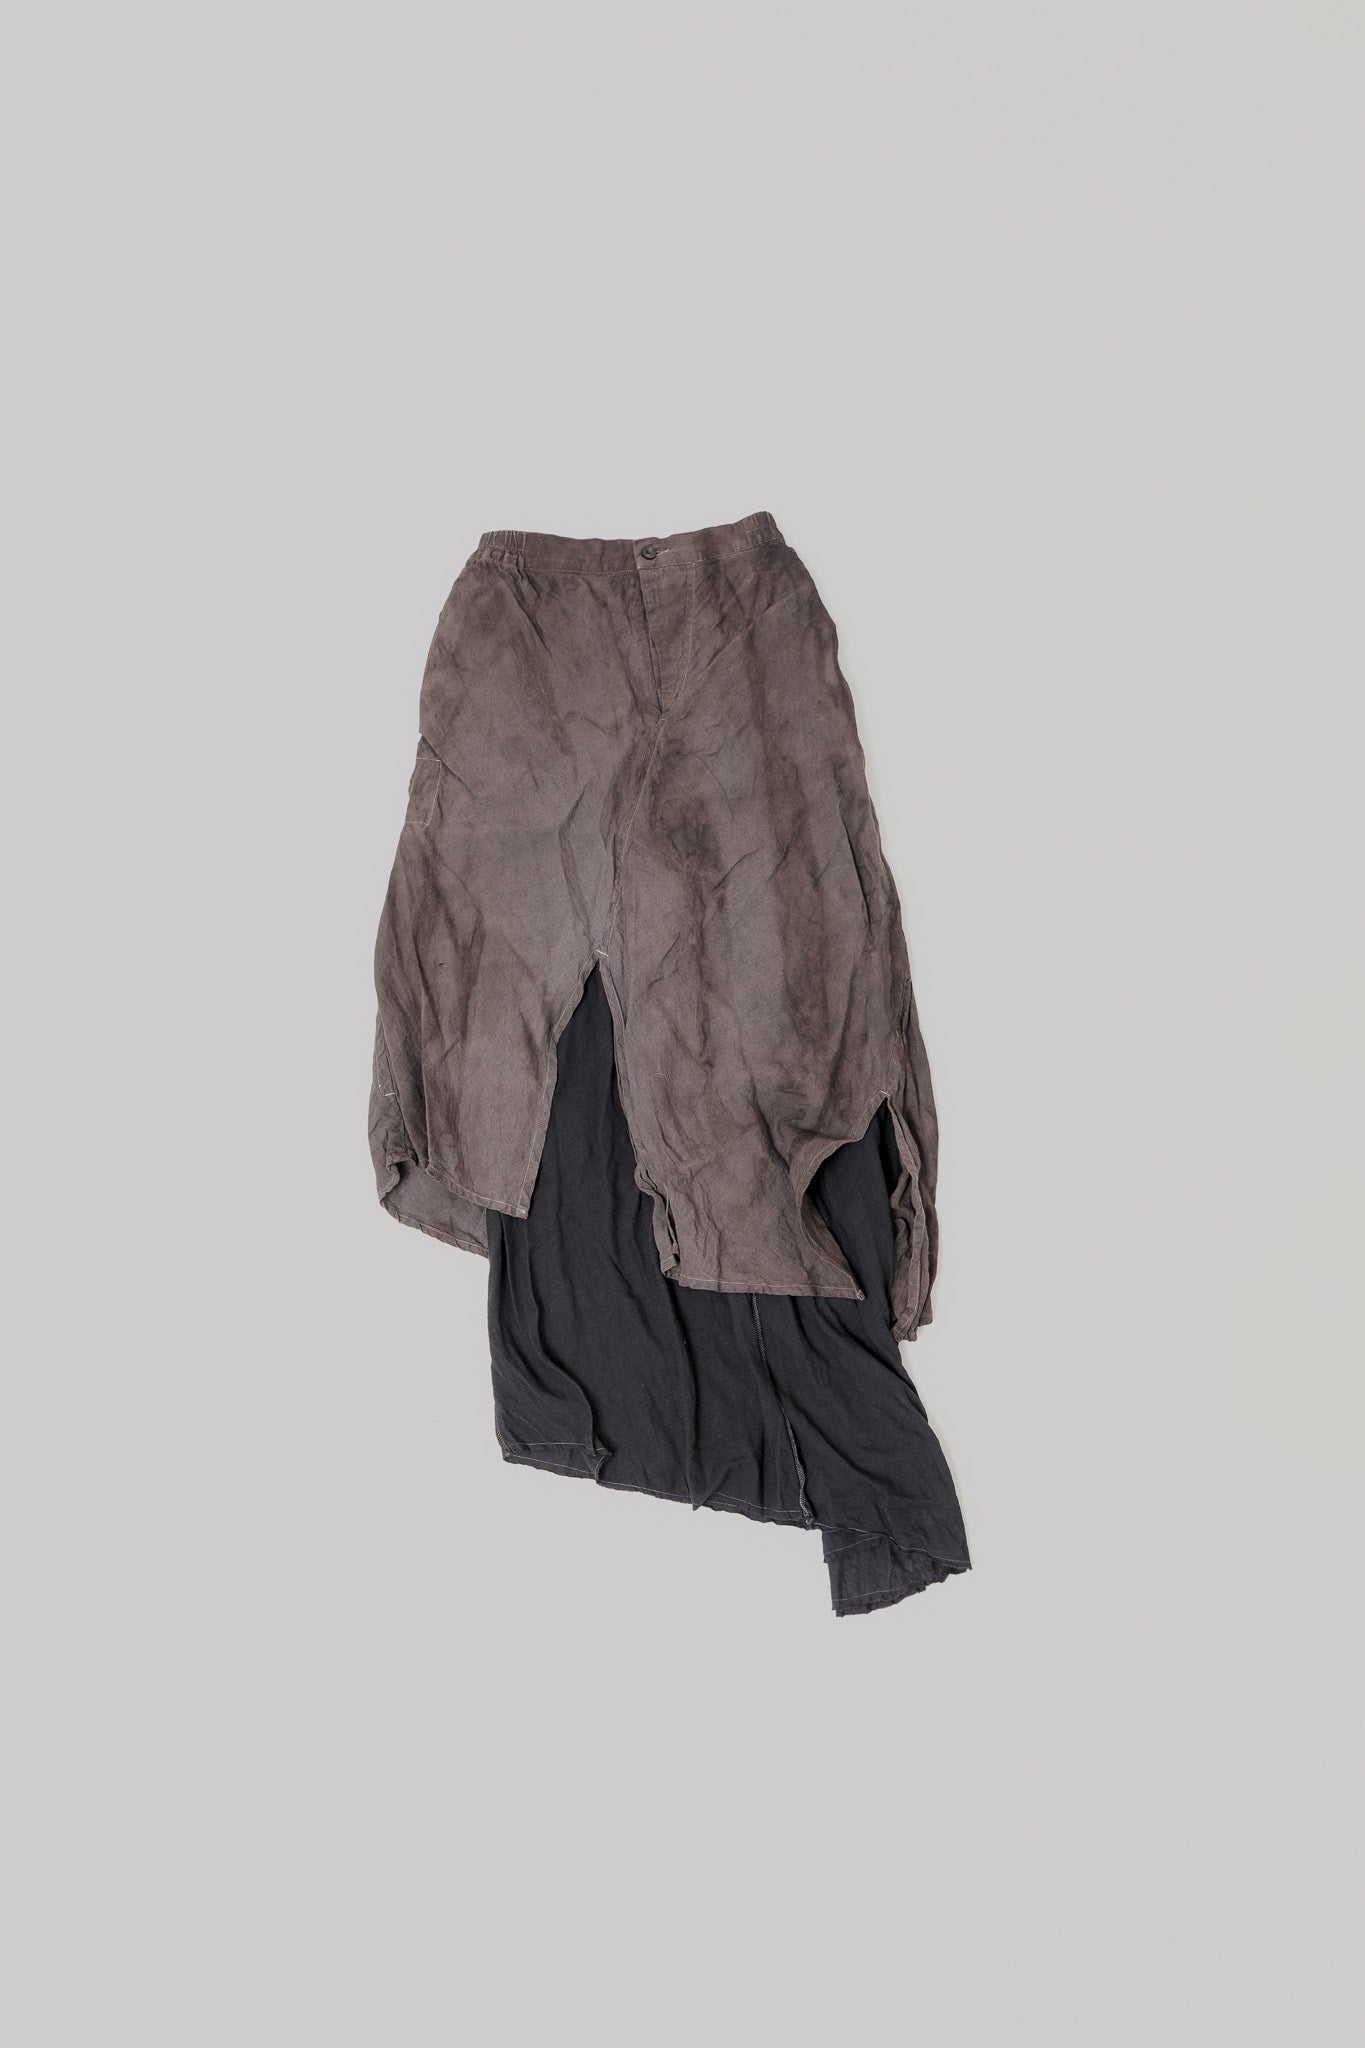 036 - Draped Table Skirt (Brown)